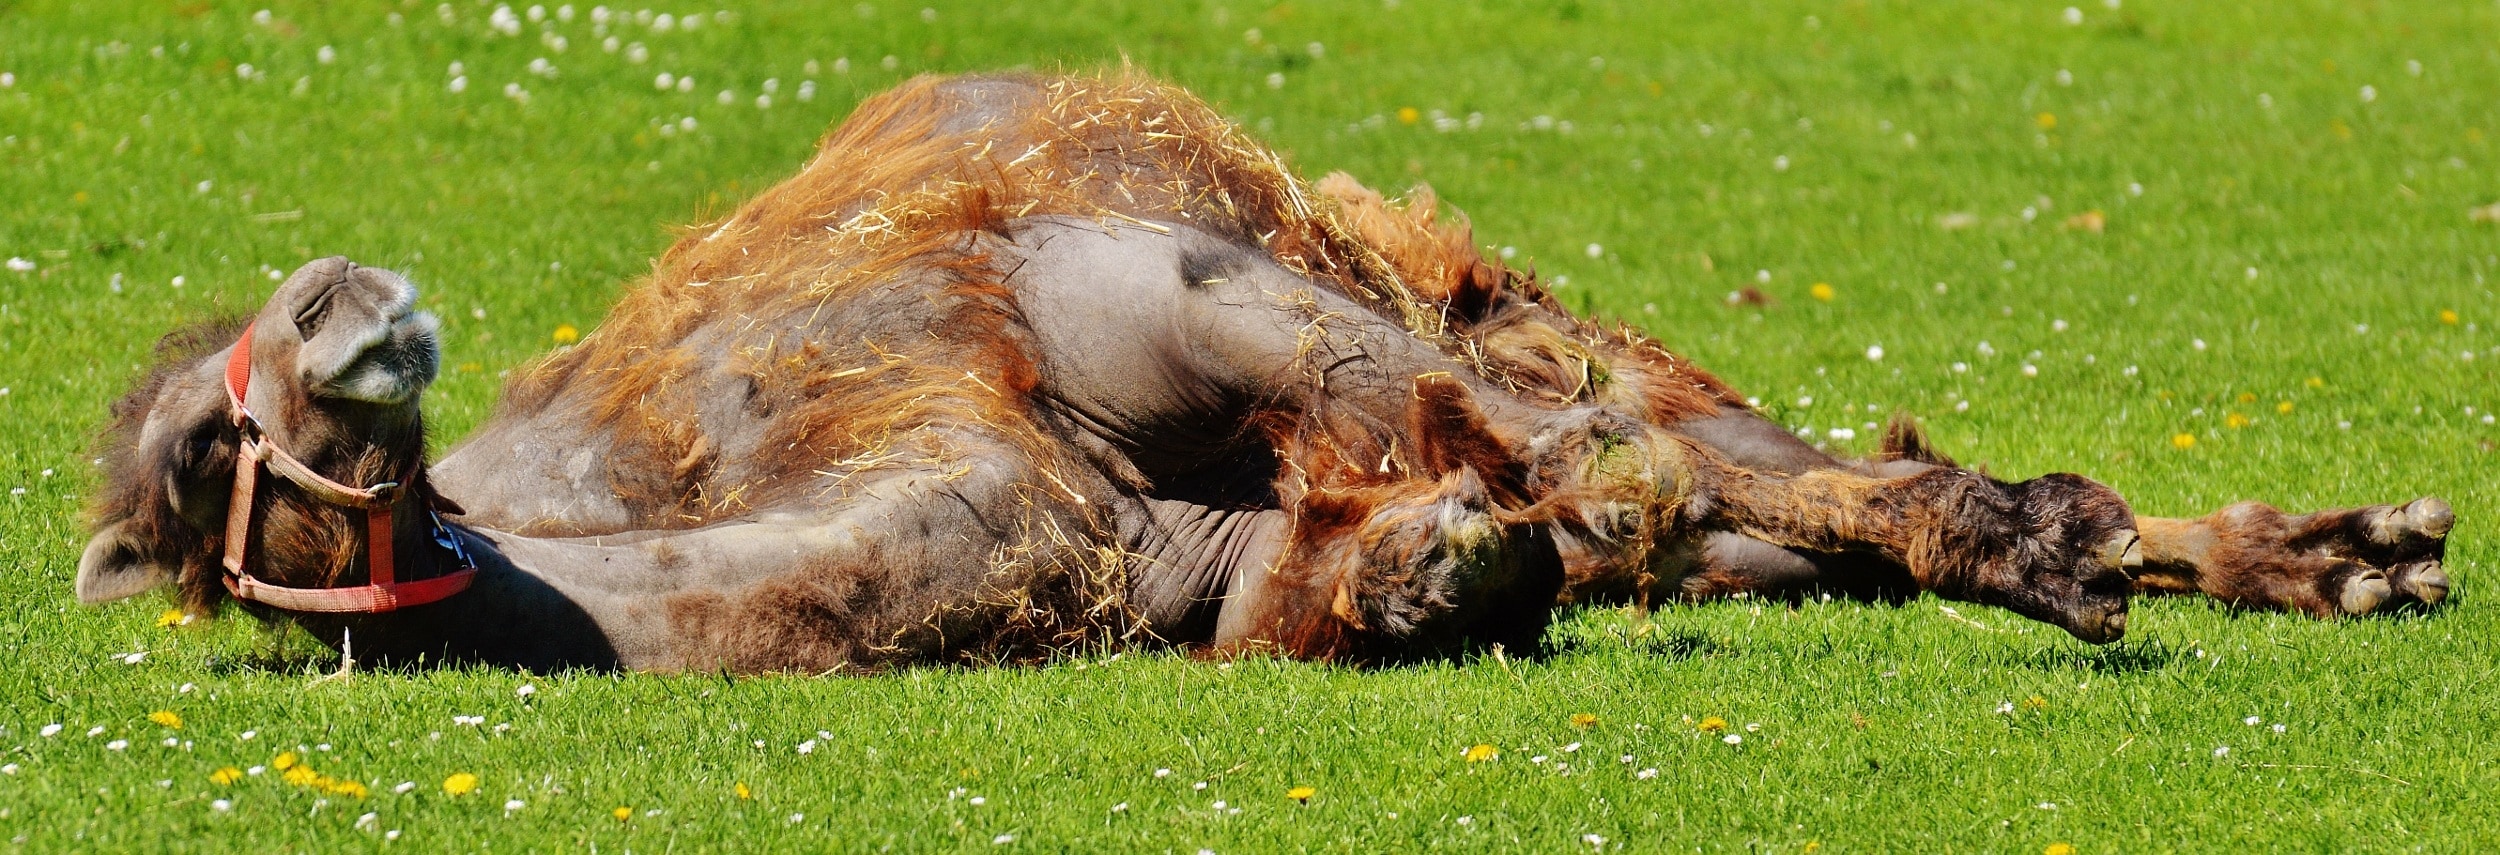 Lazing Around, Relax, Camel, Meadow, Sun, grass, one animal